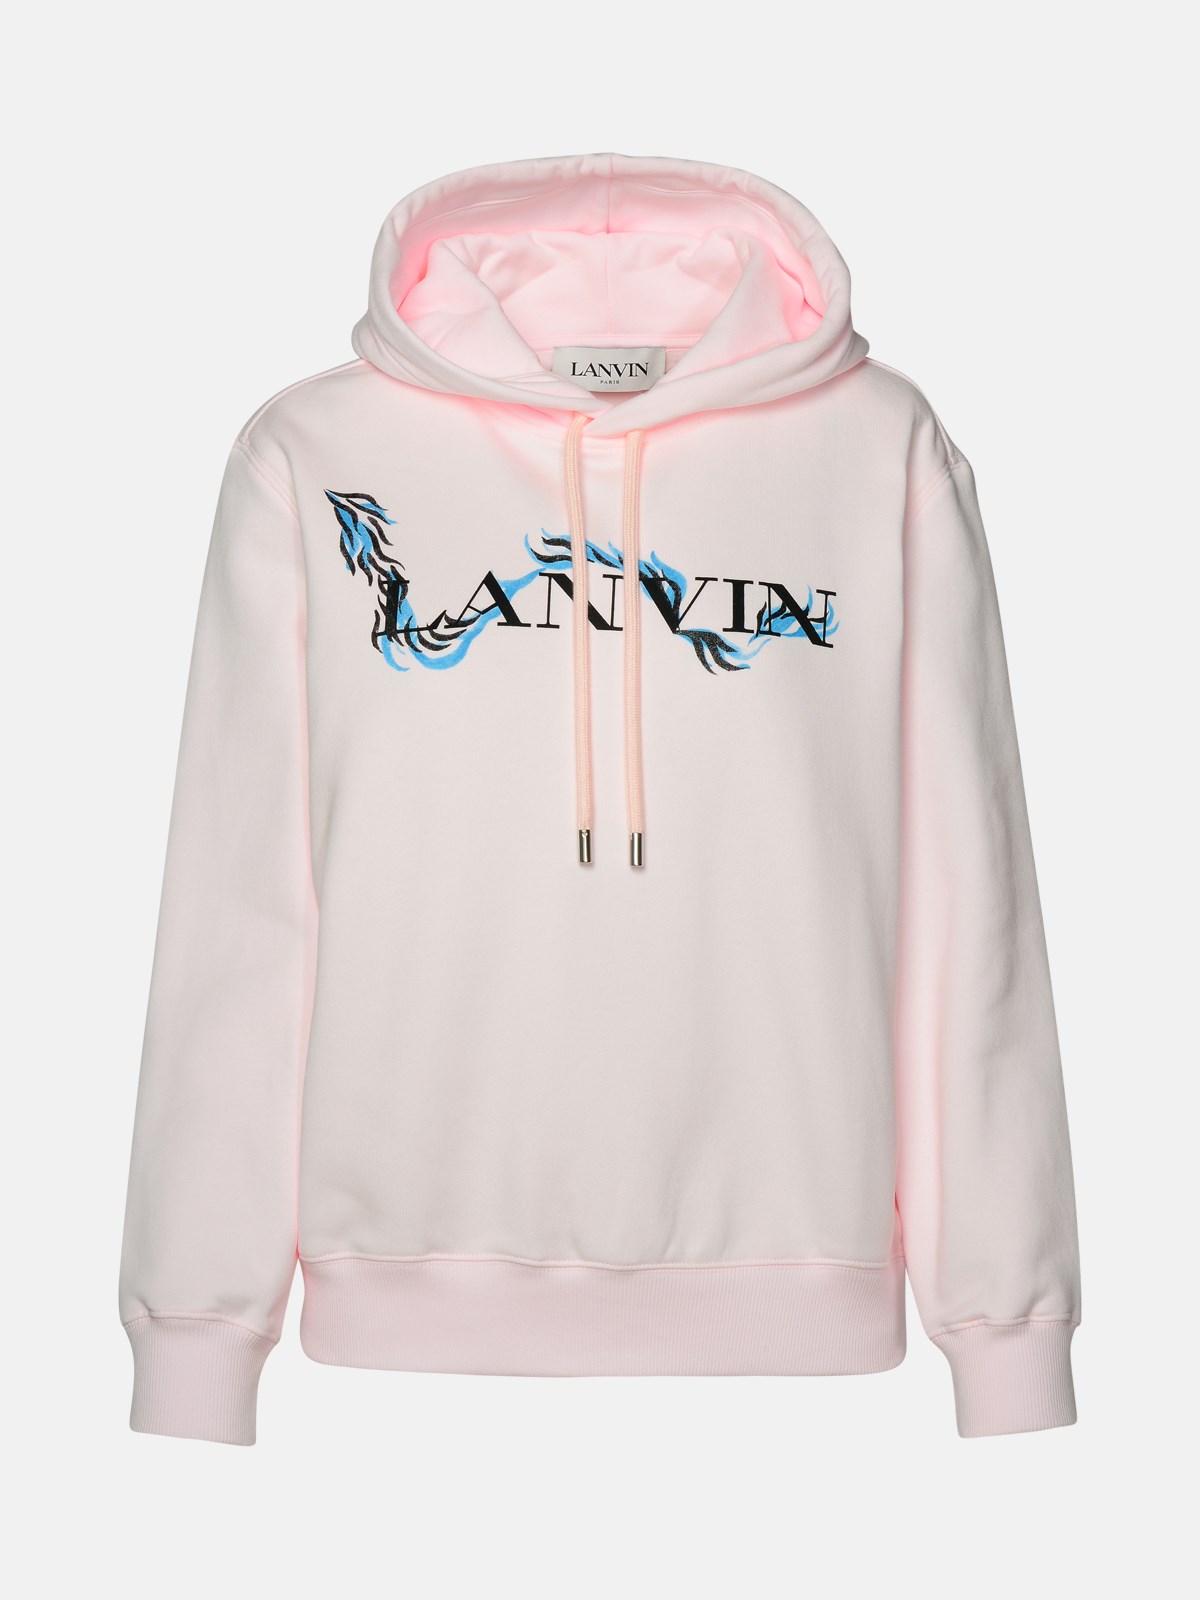 Lanvin Pink Cotton Sweatshirt